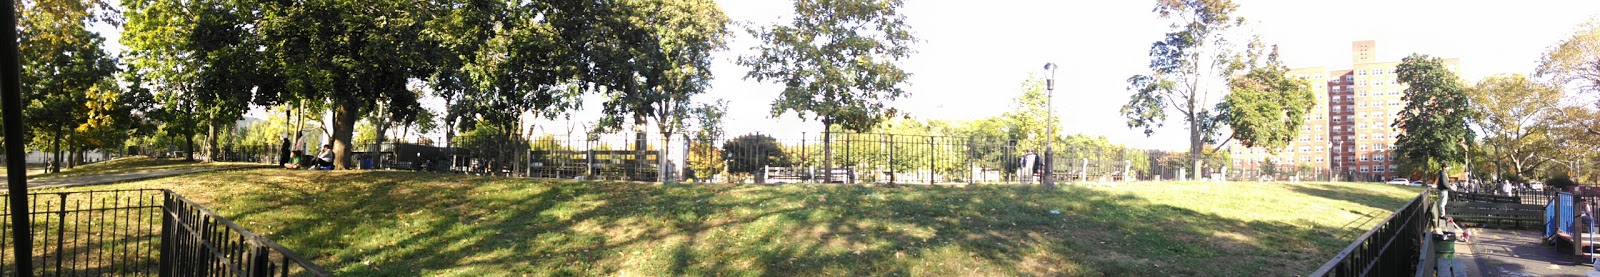 Photo of Bensonhurst Park in Brooklyn City, New York, United States - 4 Picture of Point of interest, Establishment, Park